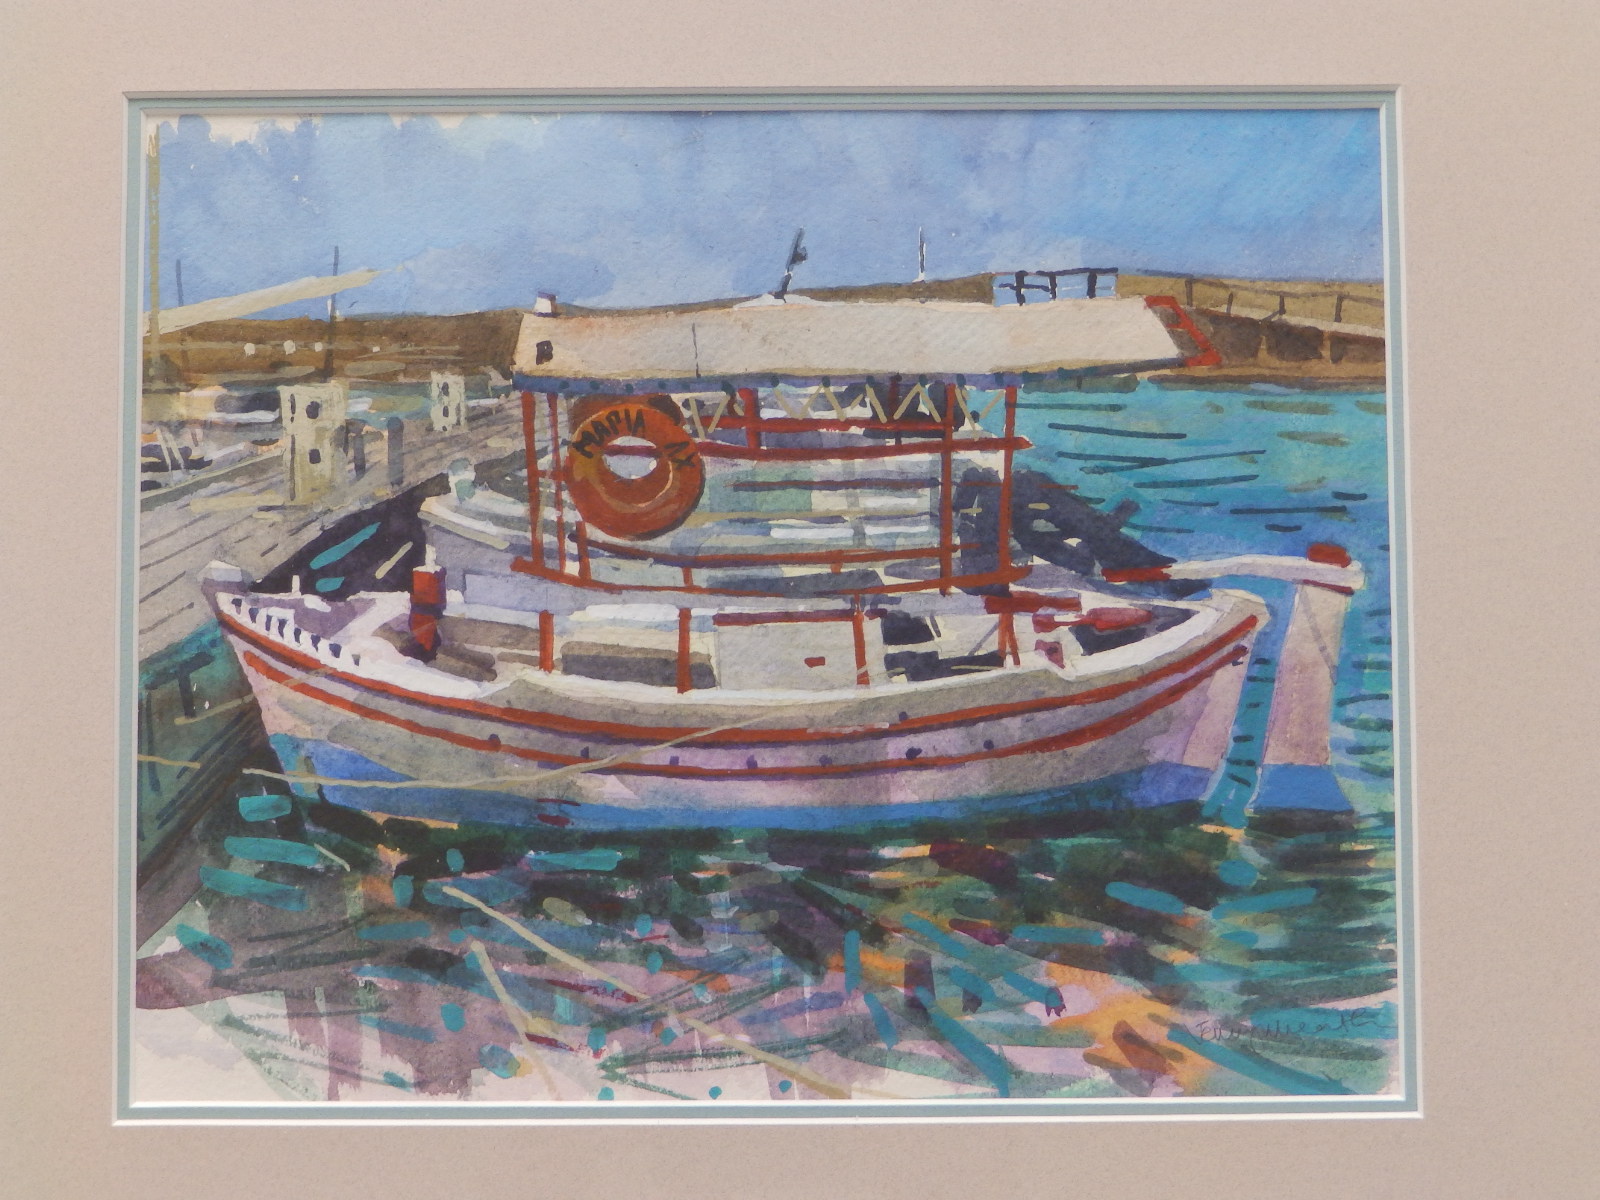 Jenny Wheatley RWS, NEAC (born 1959) - watercolour - A small ferry boat - 'Mapia AX', signed in